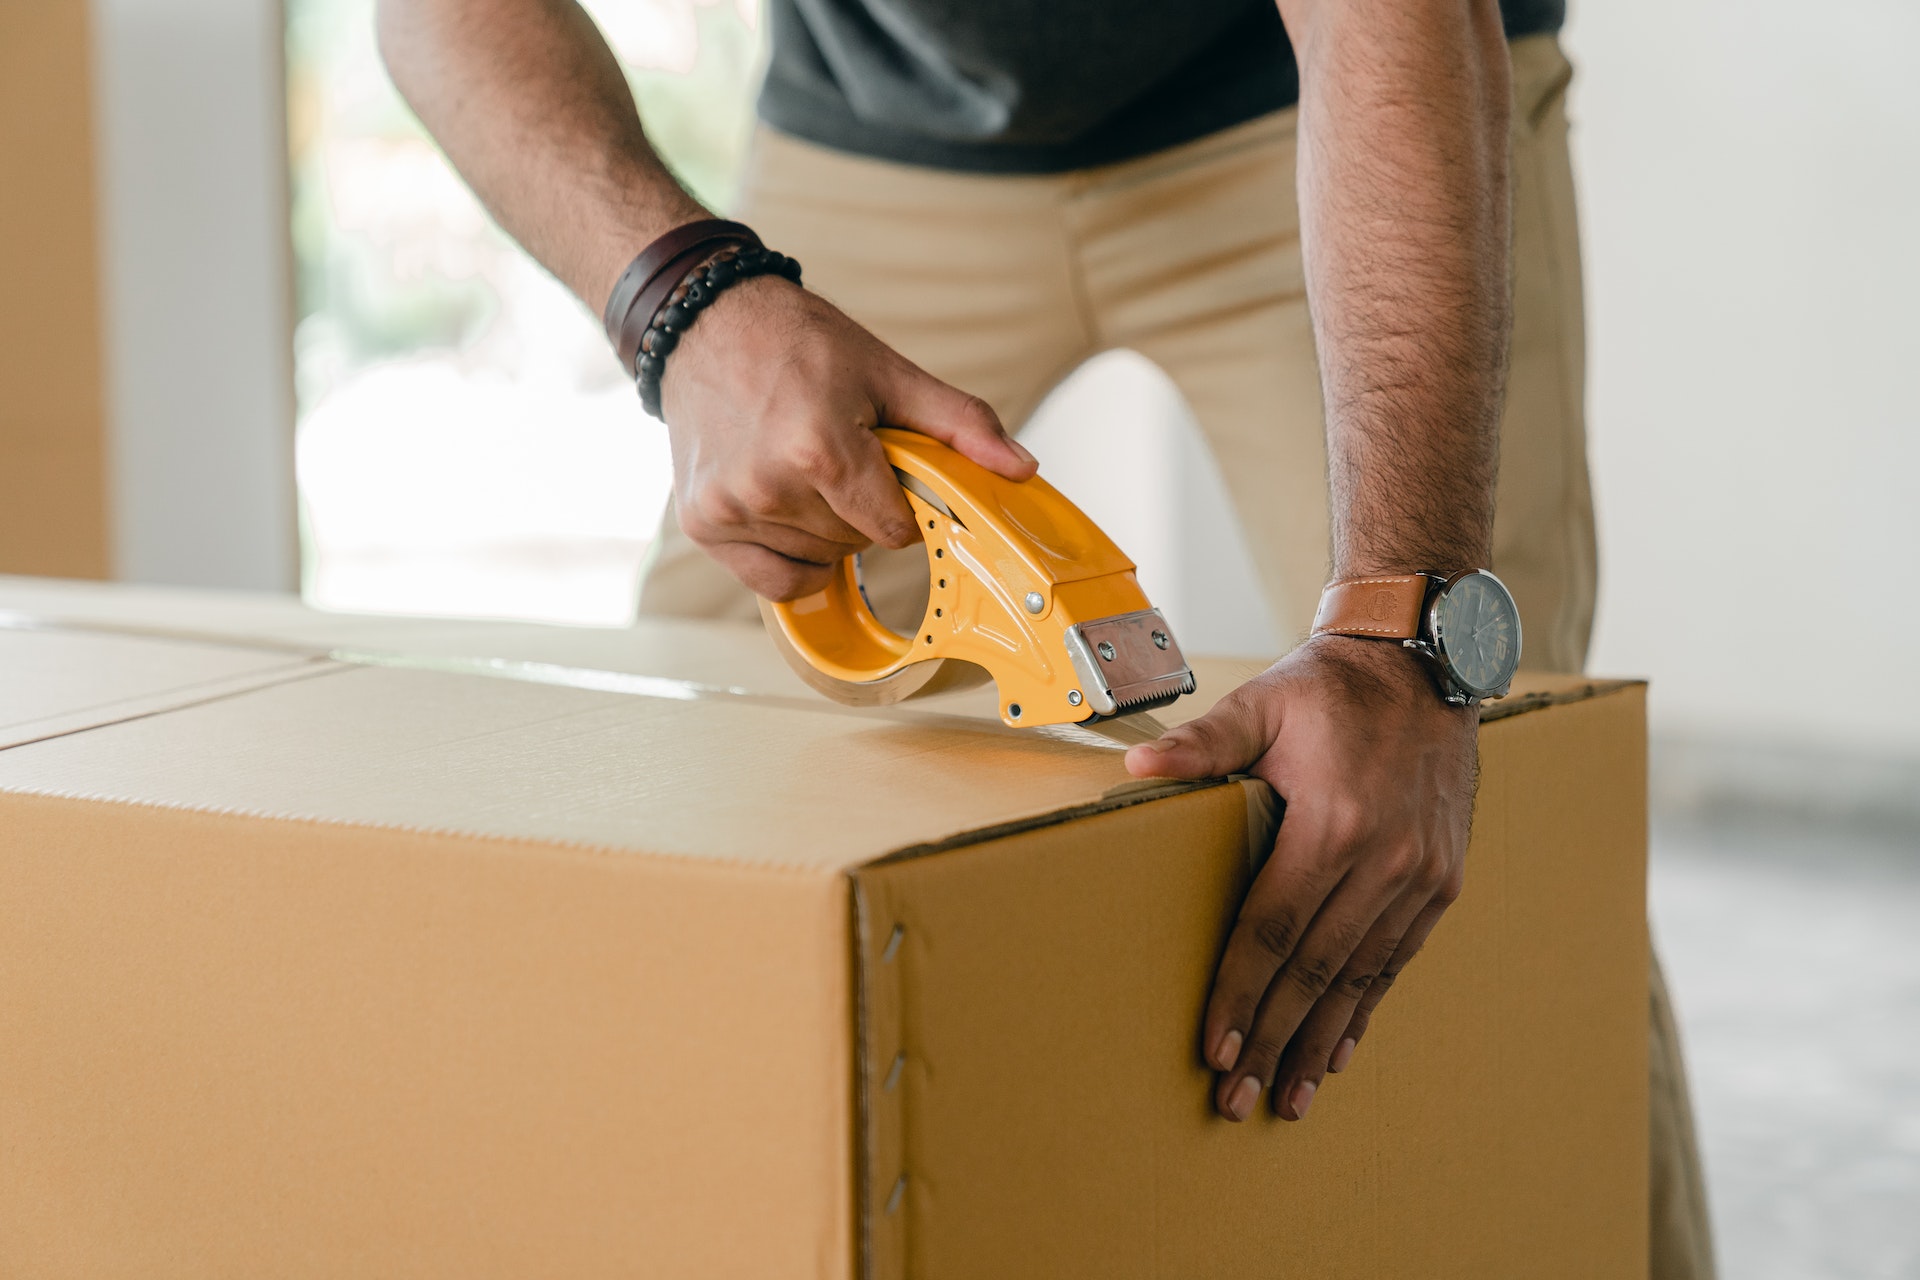 Man taping up a cardboard box